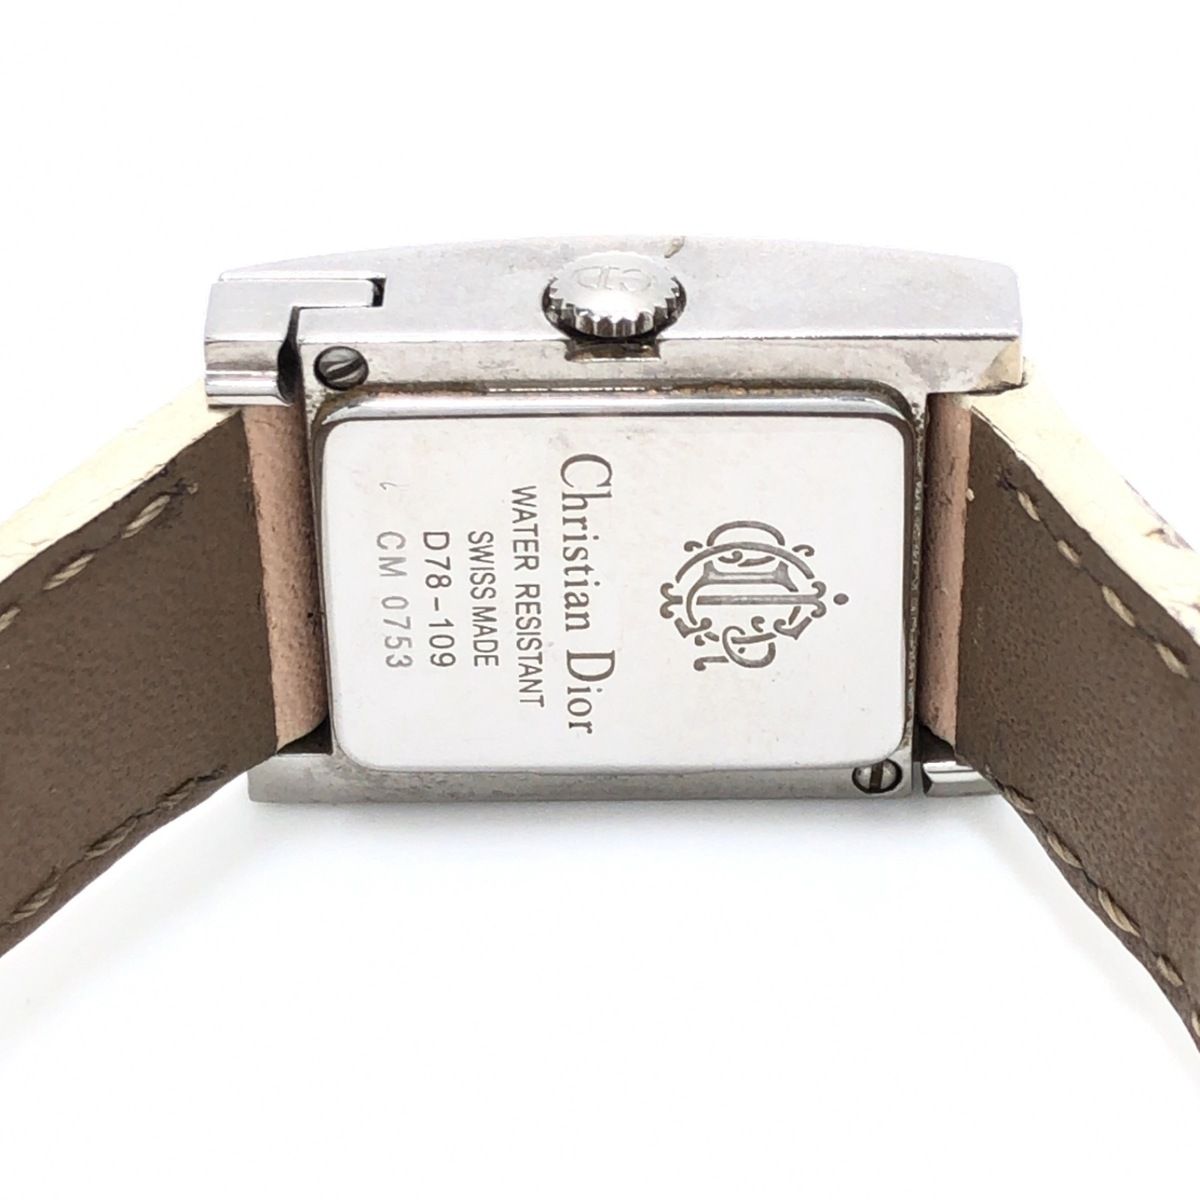 DIOR/ChristianDior(ディオール) 腕時計 マリススクエア D78-109 レディース ステッチ ホワイトシェル